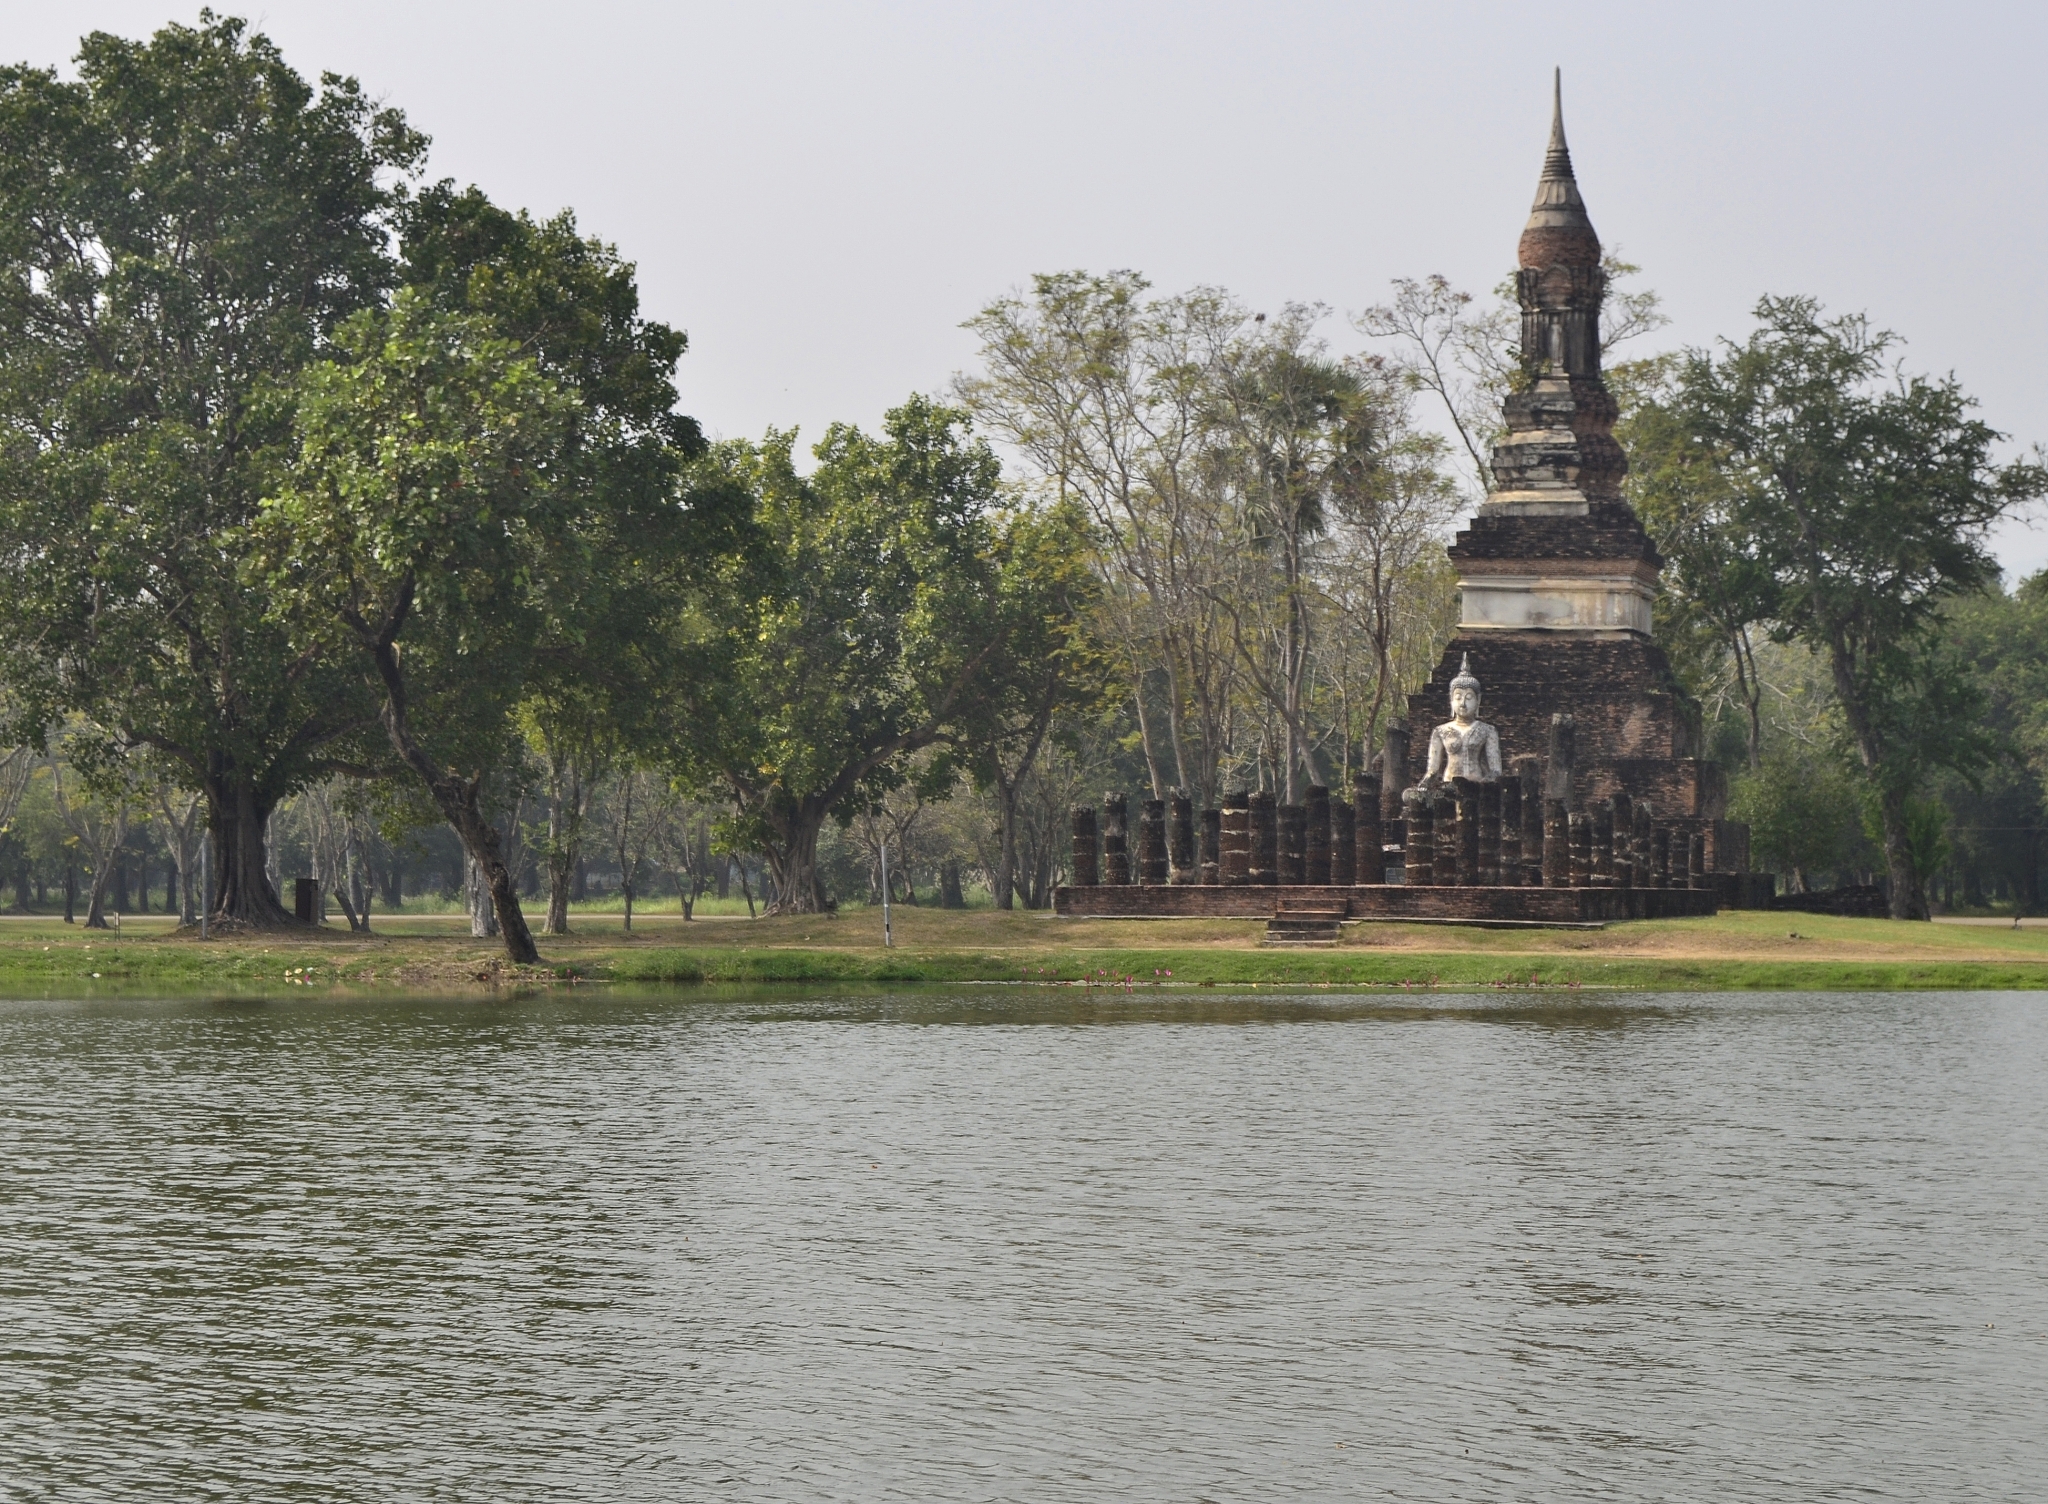 Wat_Traphang_Ngoen©-Hartmann-Linge-Wikimedia-Commons-CC-by-sa-3.0”